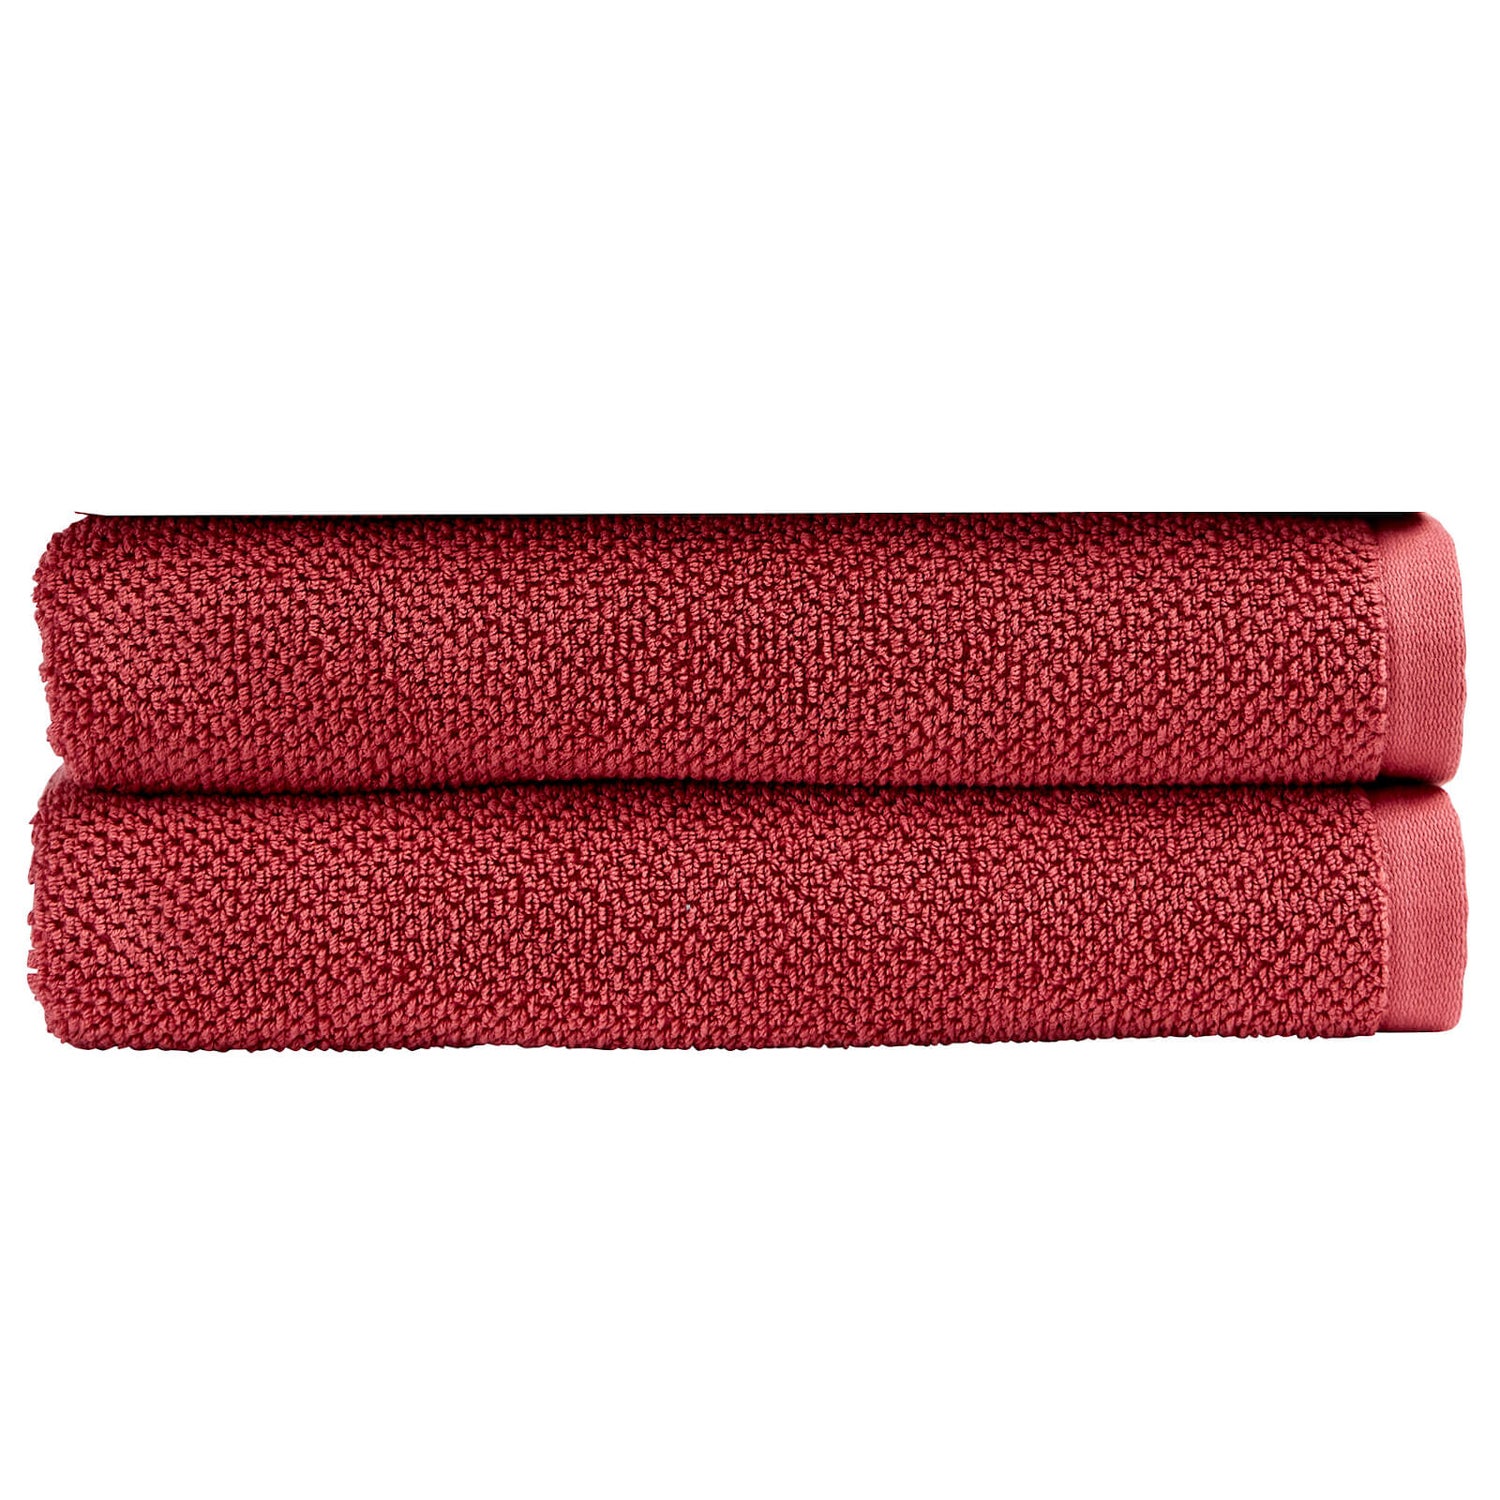 Christy Brixton Towel - Set of 2 - Pomegranate